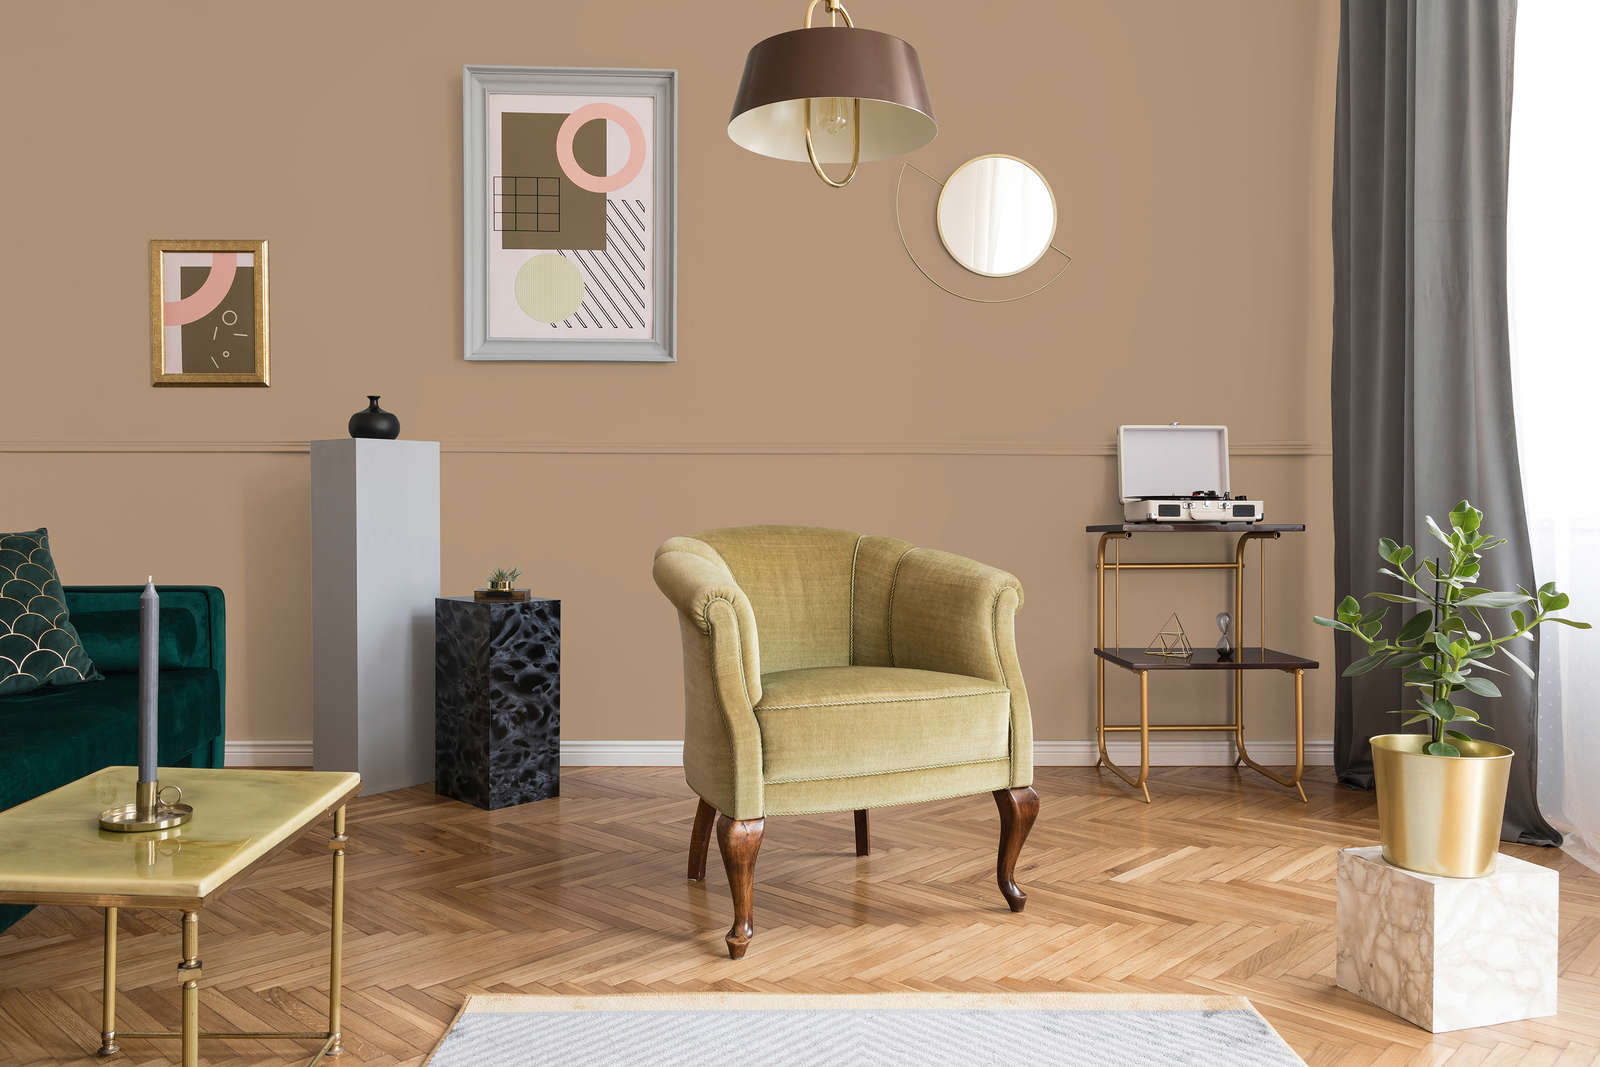             Premium Wall Paint cheerful light beige »Boho Beige« NW727 – 1 litre
        